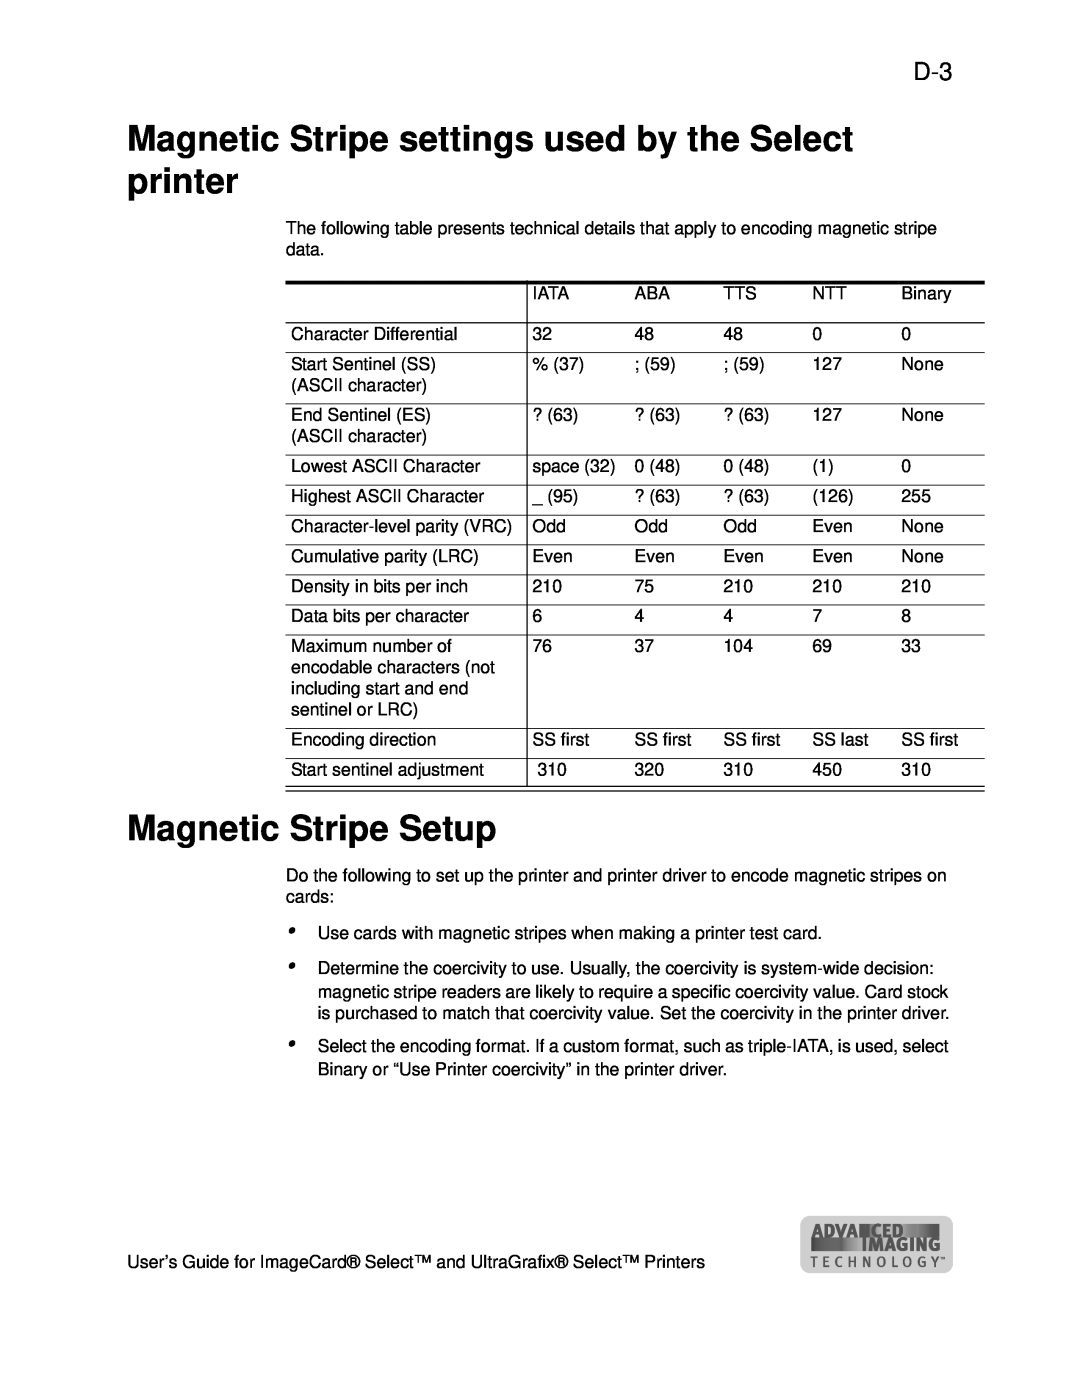 Datacard Group ImageCard SelectTM and UltraGrafix SelectTM Printers Magnetic Stripe settings used by the Select printer 